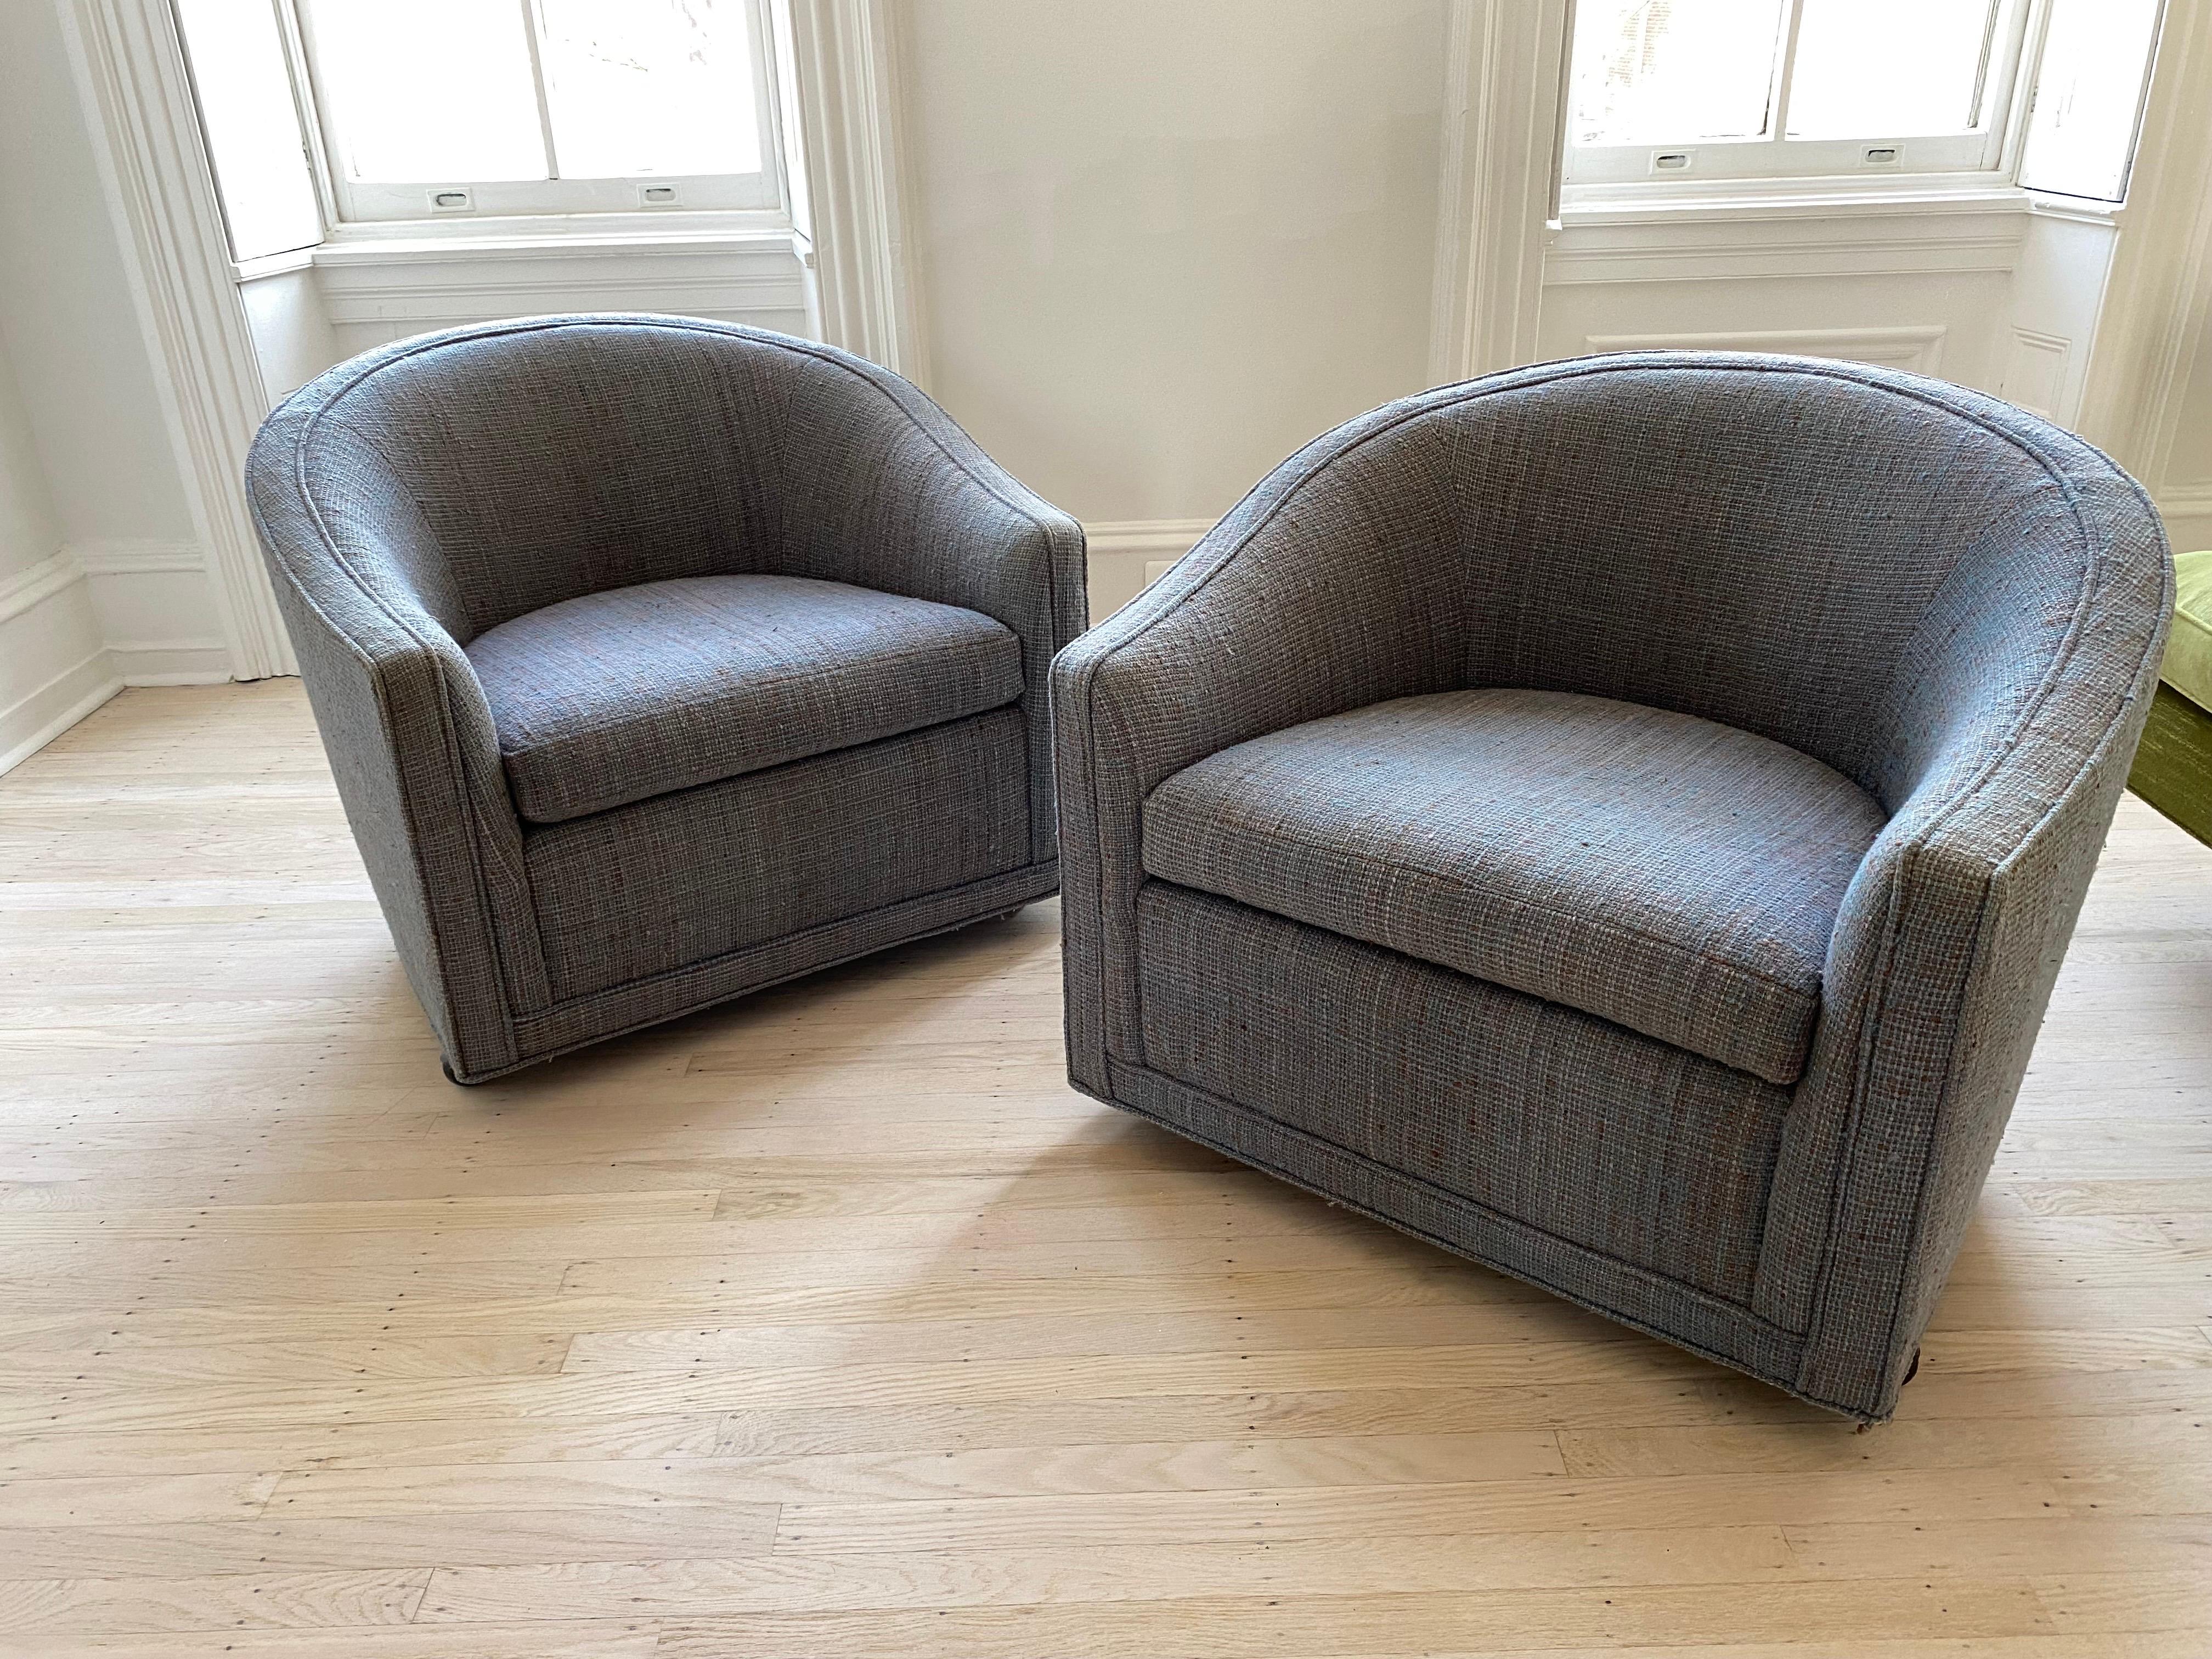 Benjamin Baldwin for Jack Lenor Larsen Furniture Company Barrel Chairs For Sale 6